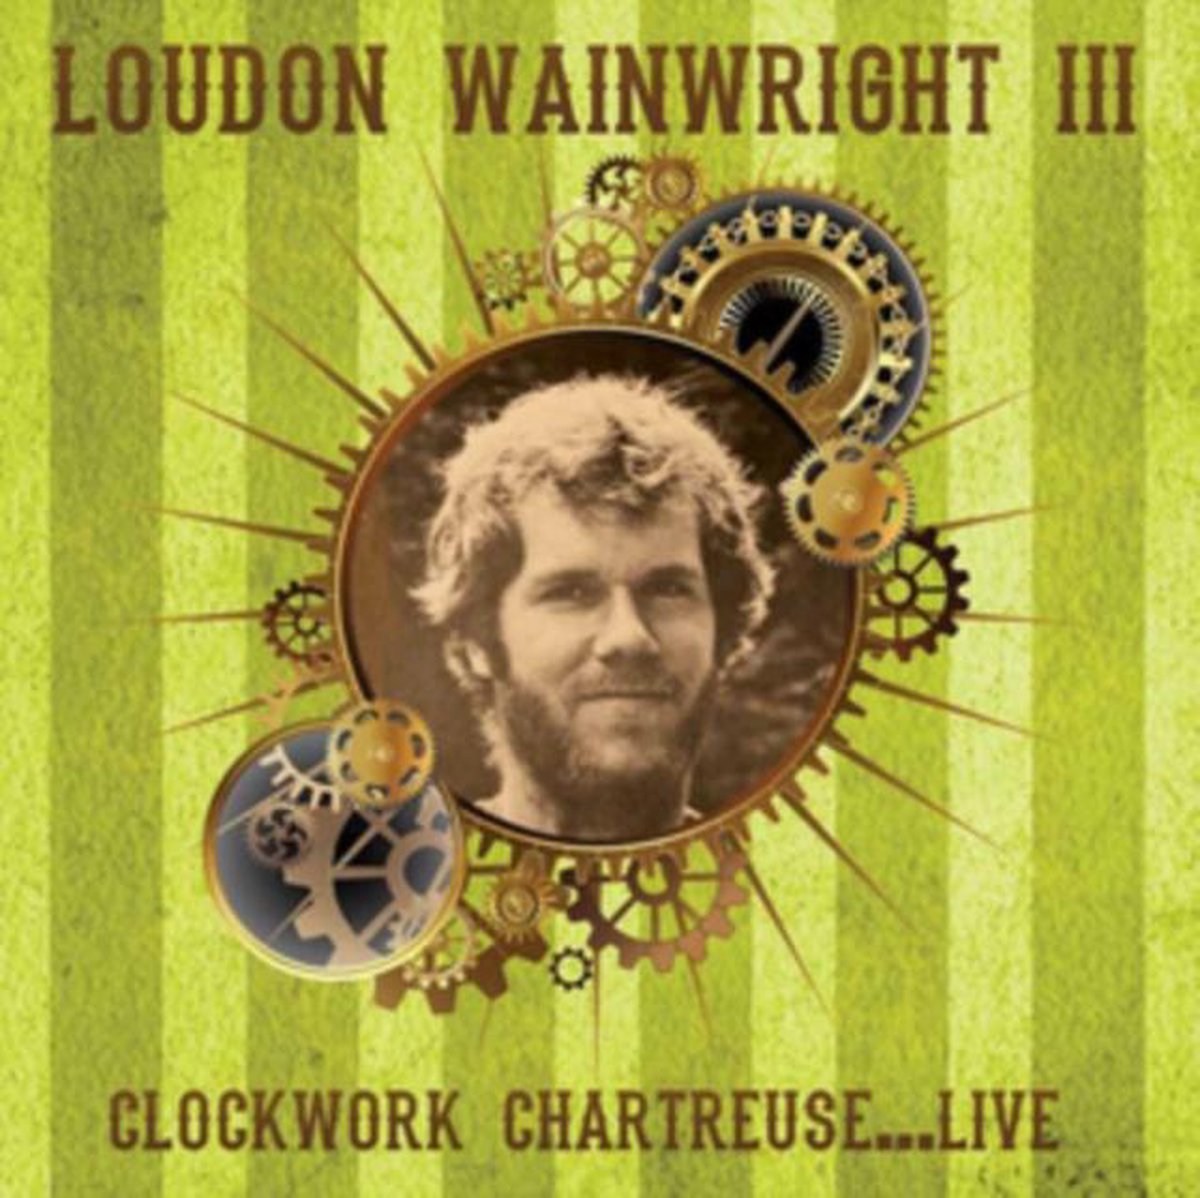 Clockwork Chartreuse… Live - Loudon -Iii- Wainwright